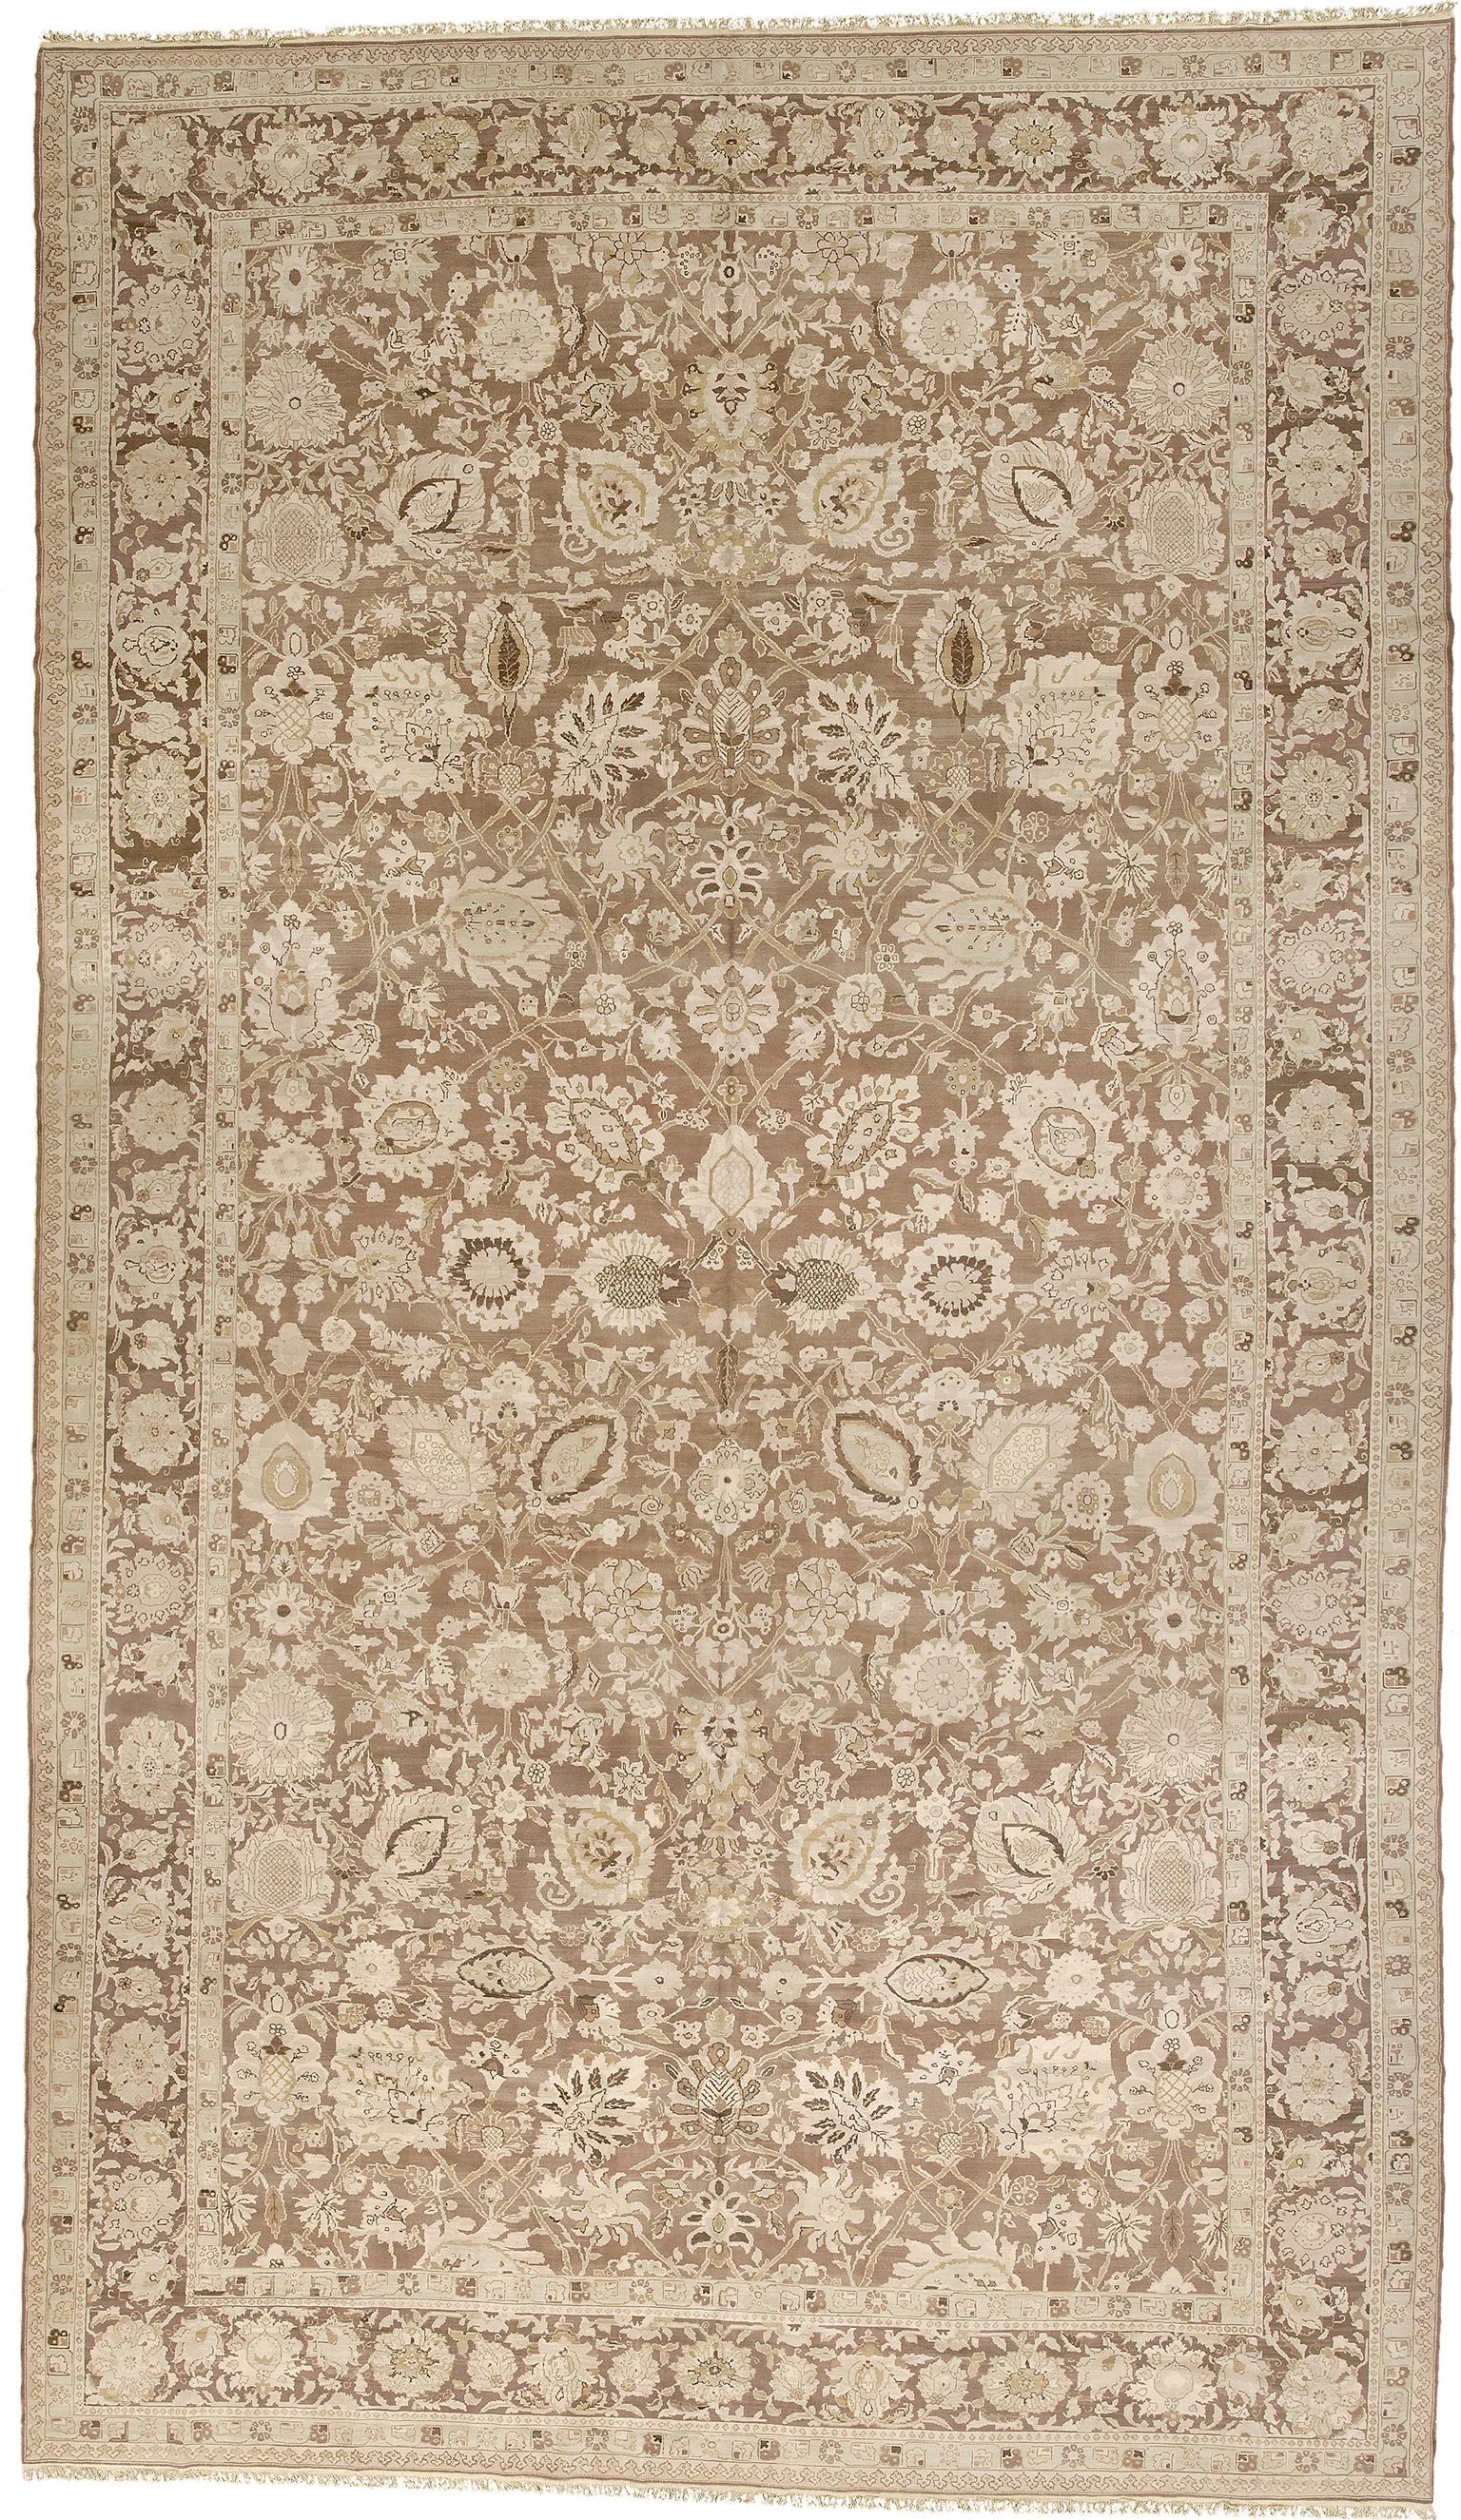 Contemporary 'Shah Abus' Handwoven Carpet
China ca. 2002